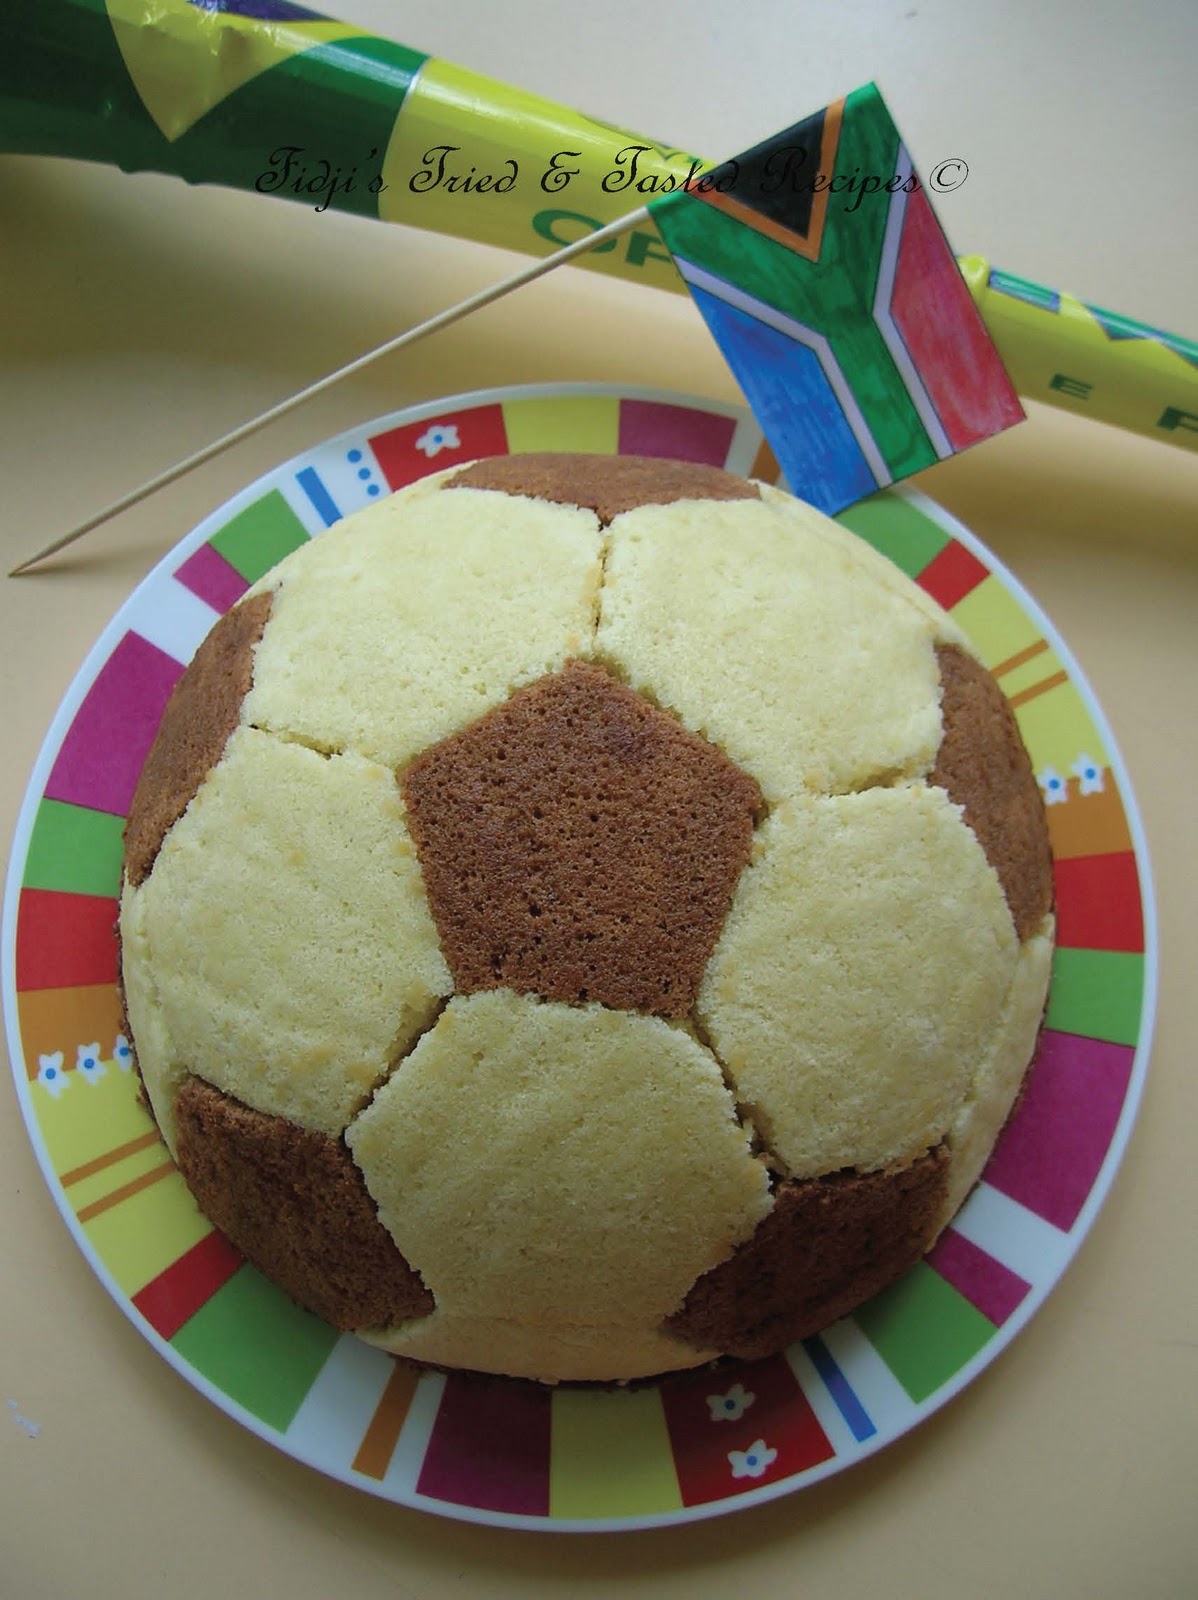 Fidji's Tried & Tasted Recipes Football Cake